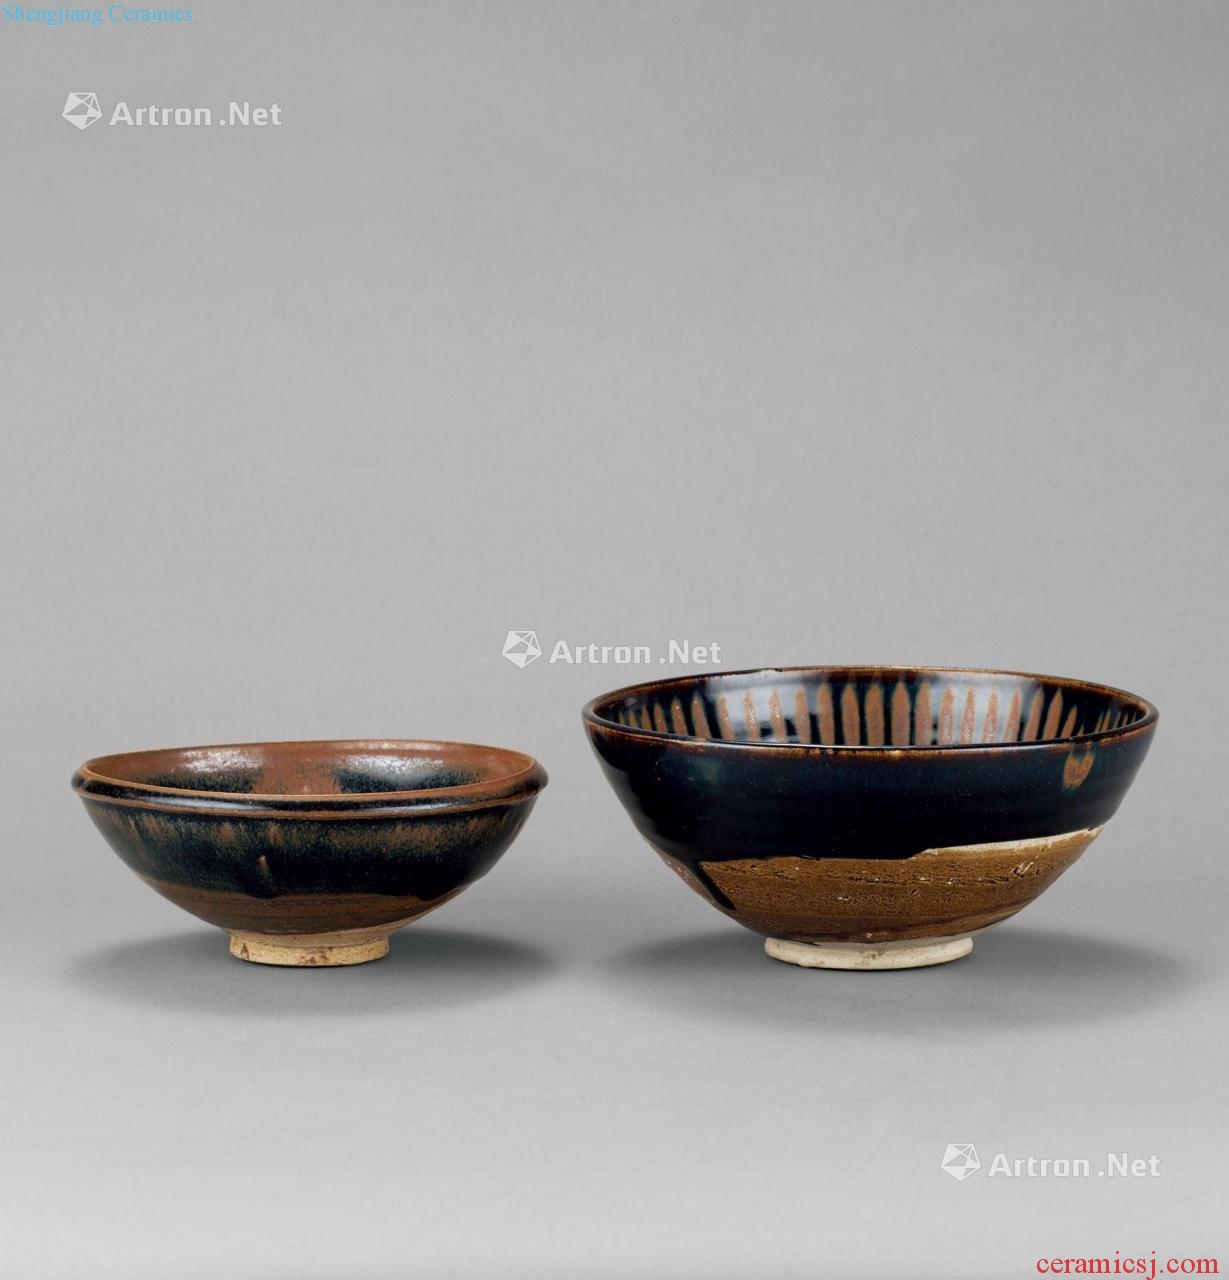 Jin magnetic state kiln iron embroidery pattern bowl (a set of 2)